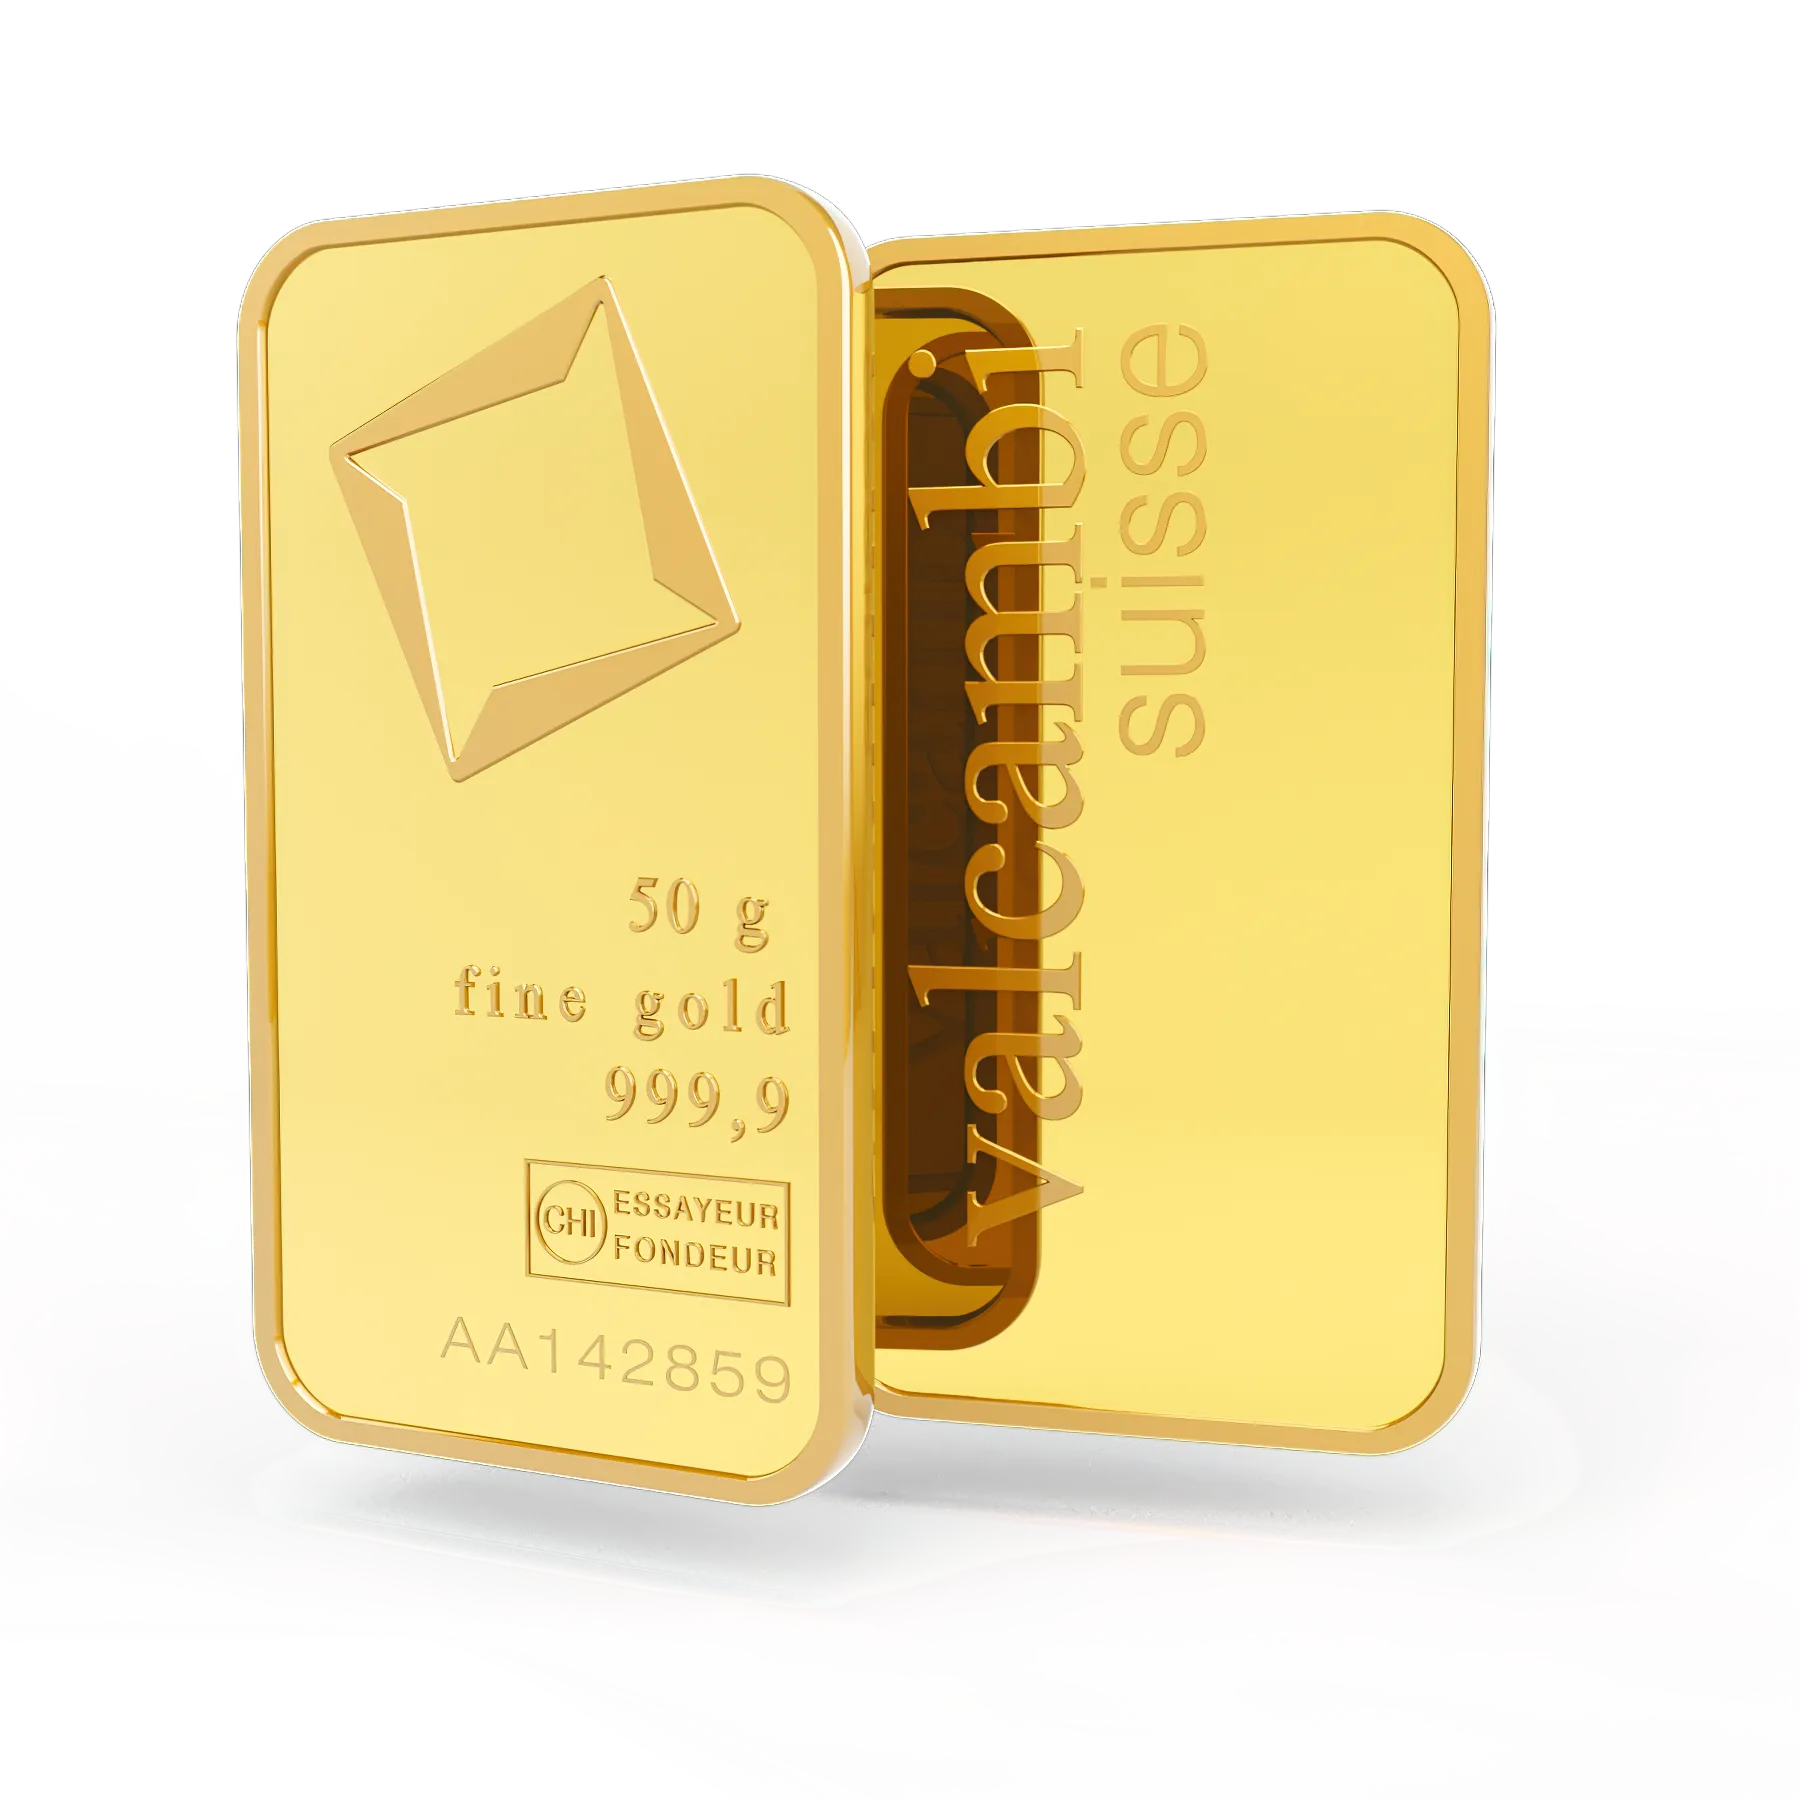 Aranyrúd 50gr, Svájc, Fine Gold 999,9